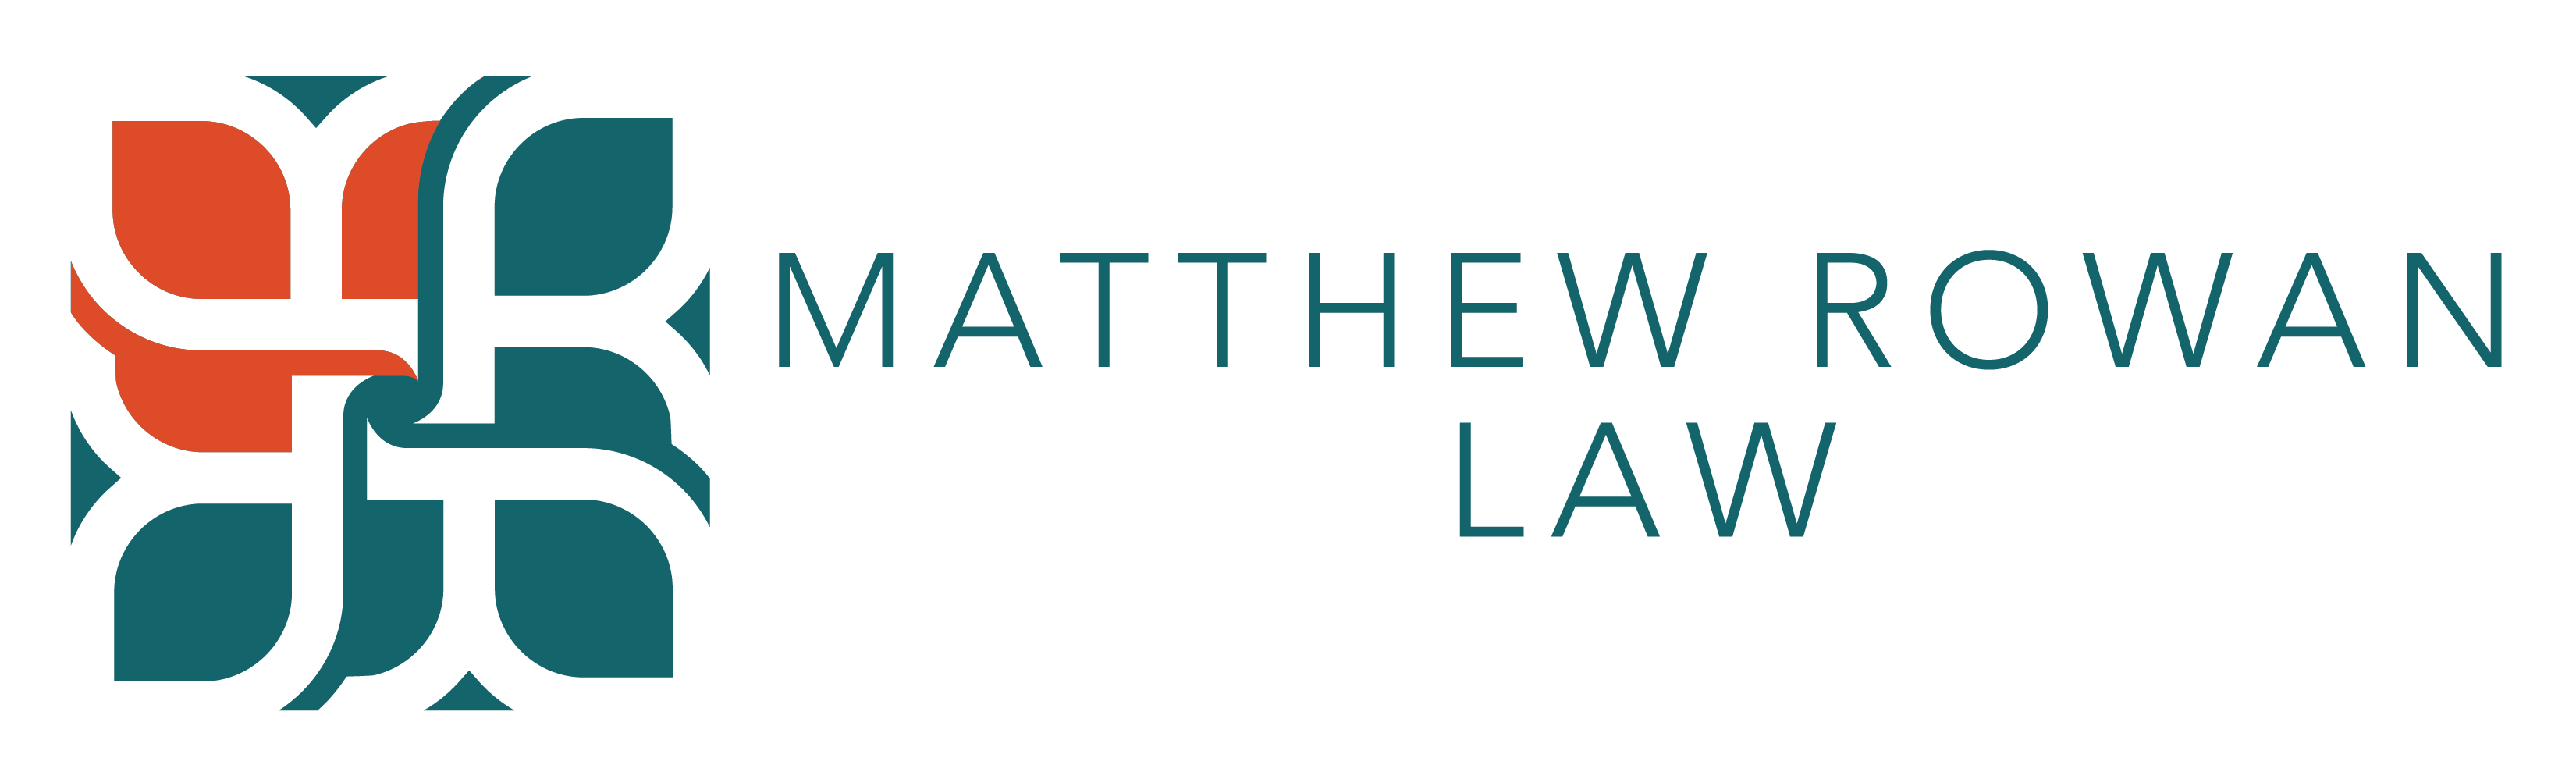 Matthew Rowan Law Header Banner